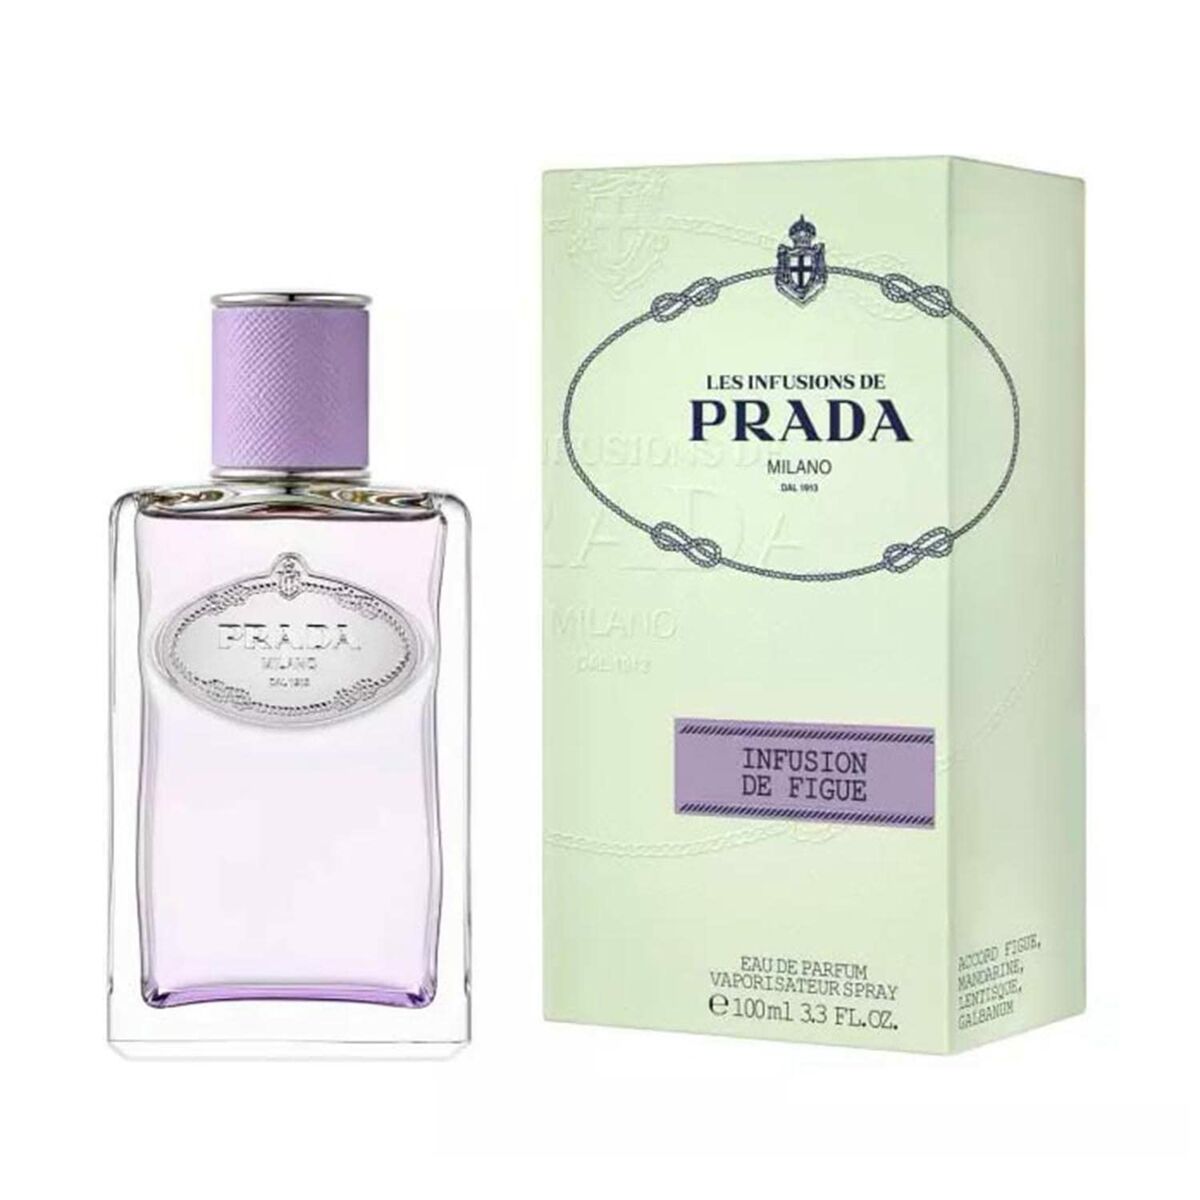 Parfum Femme Prada EDP Infusion de figue 100 ml - Prada - Jardin D'Eyden - jardindeyden.fr